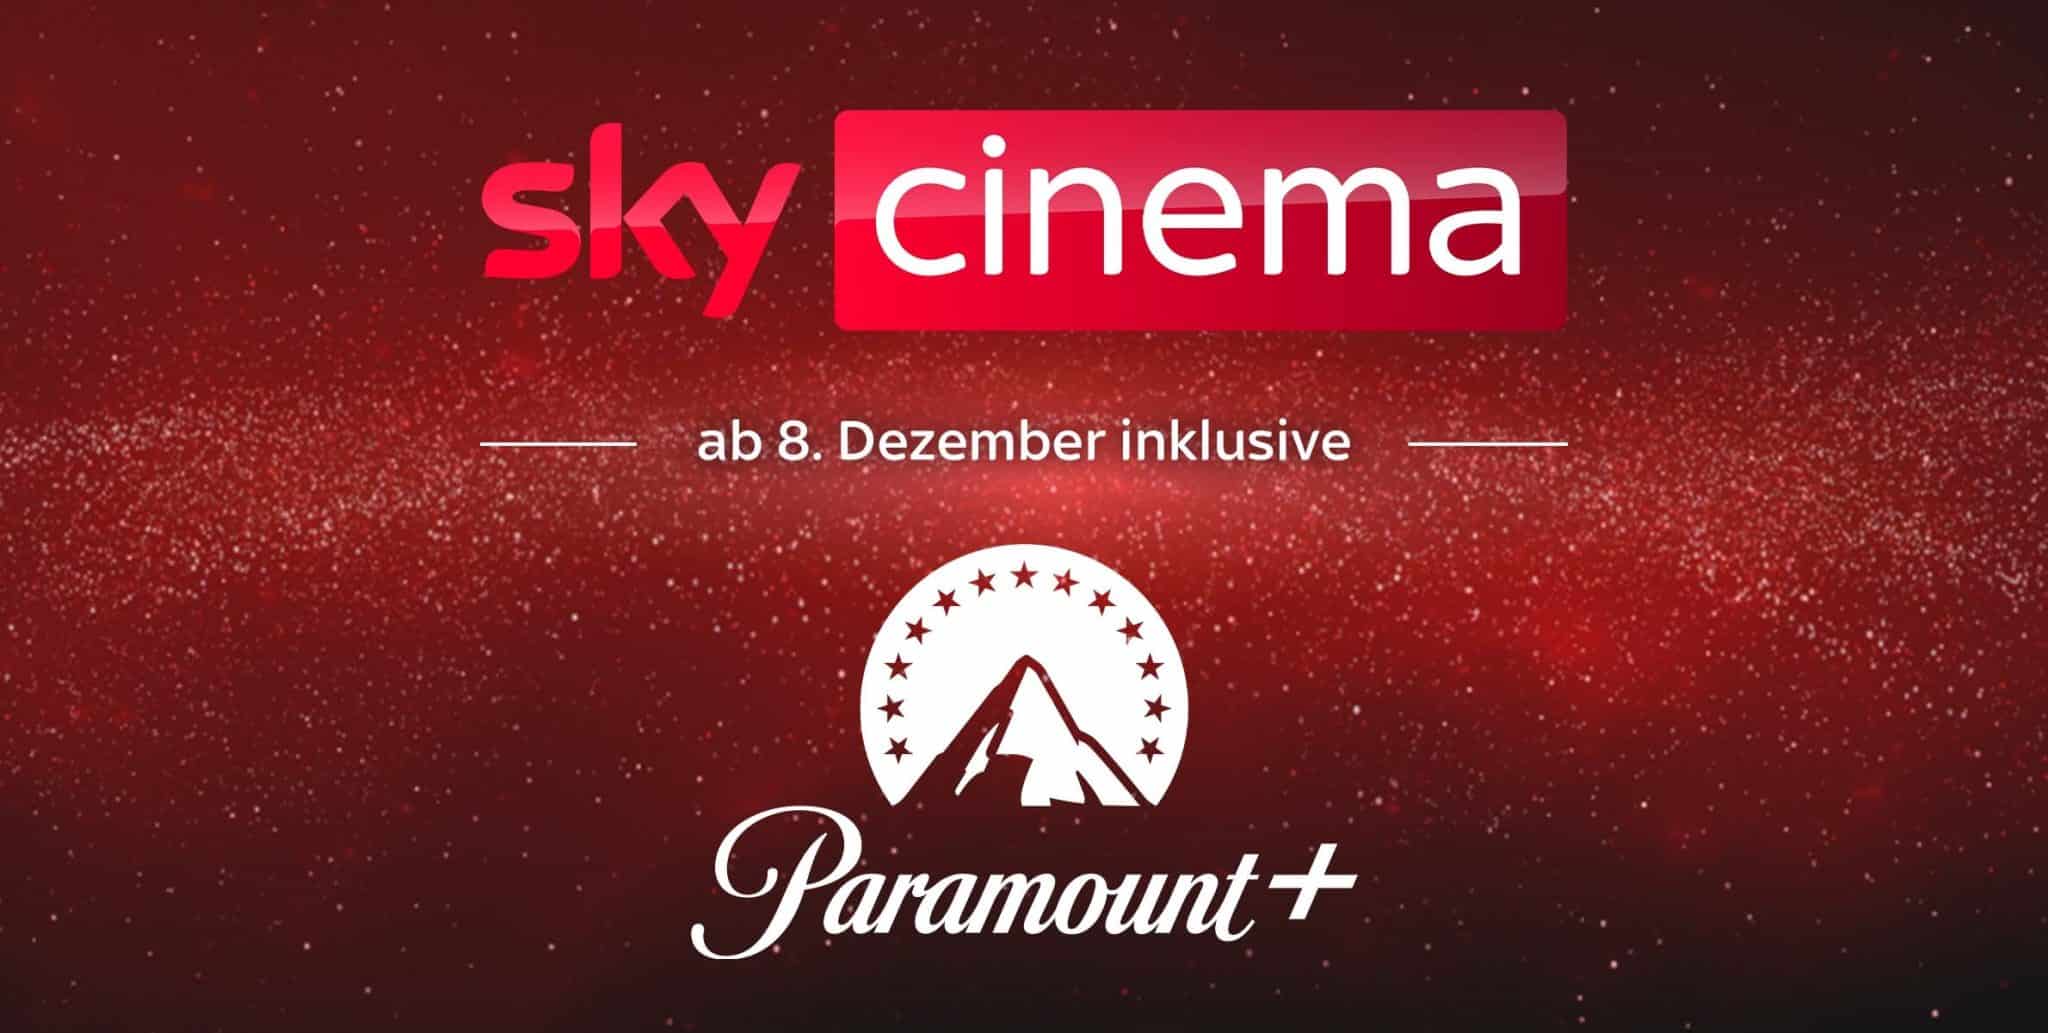 sky cinema paramount plus scaled